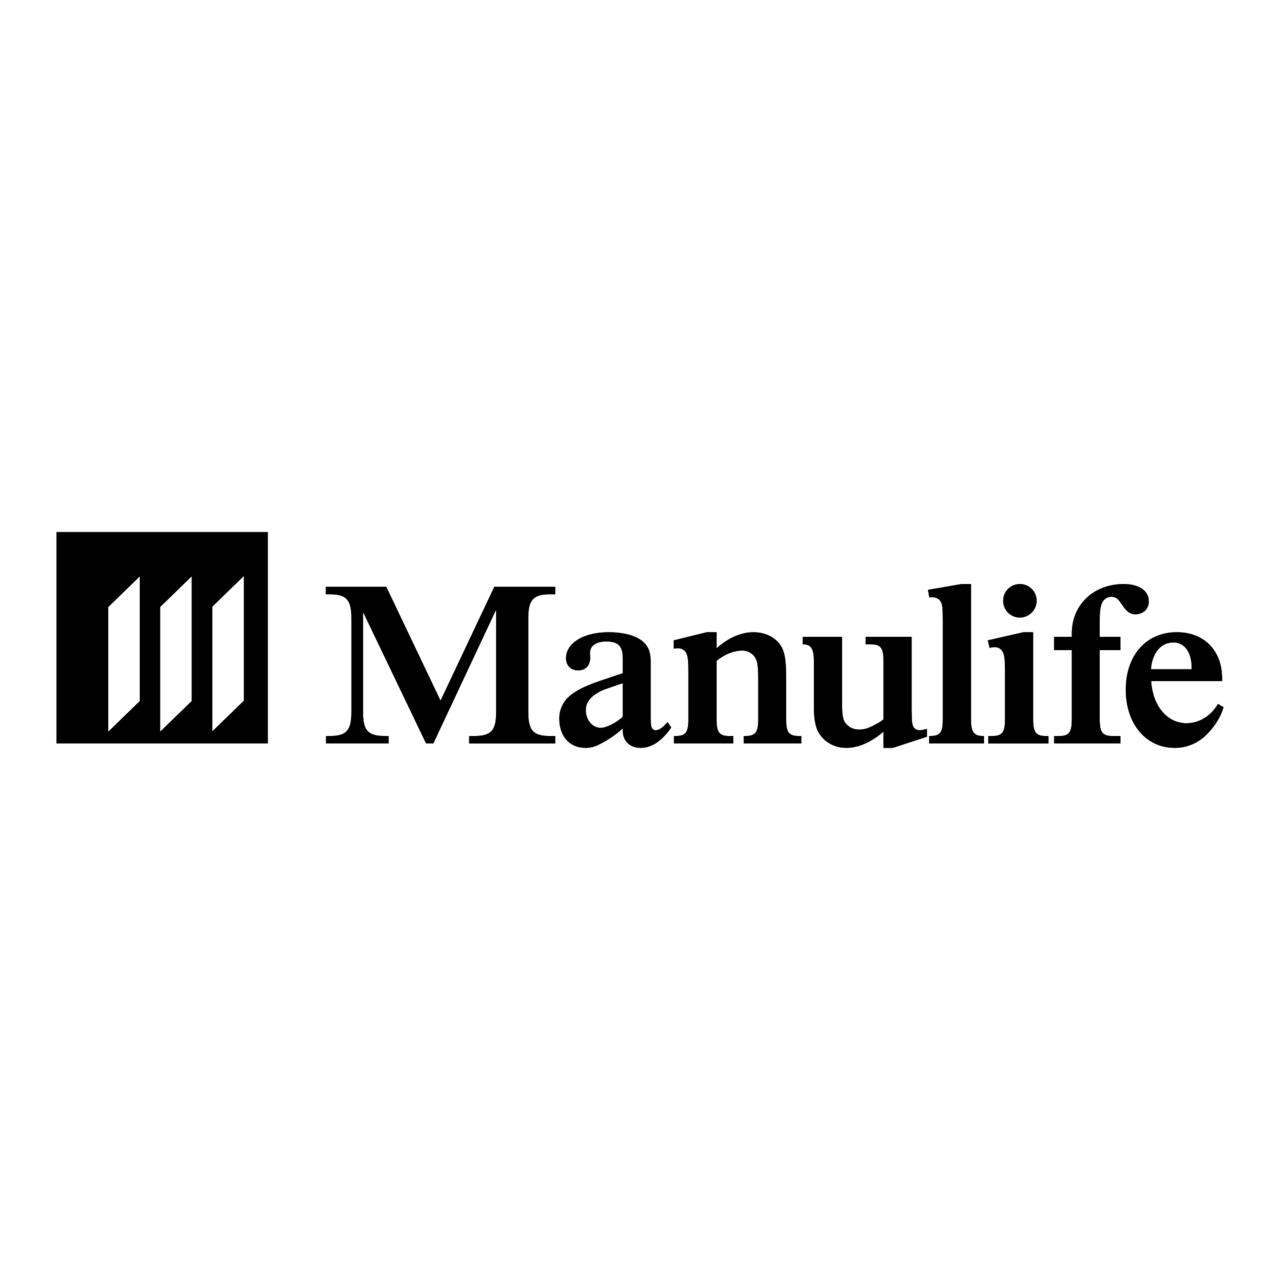 manulife-logo-black-and-white